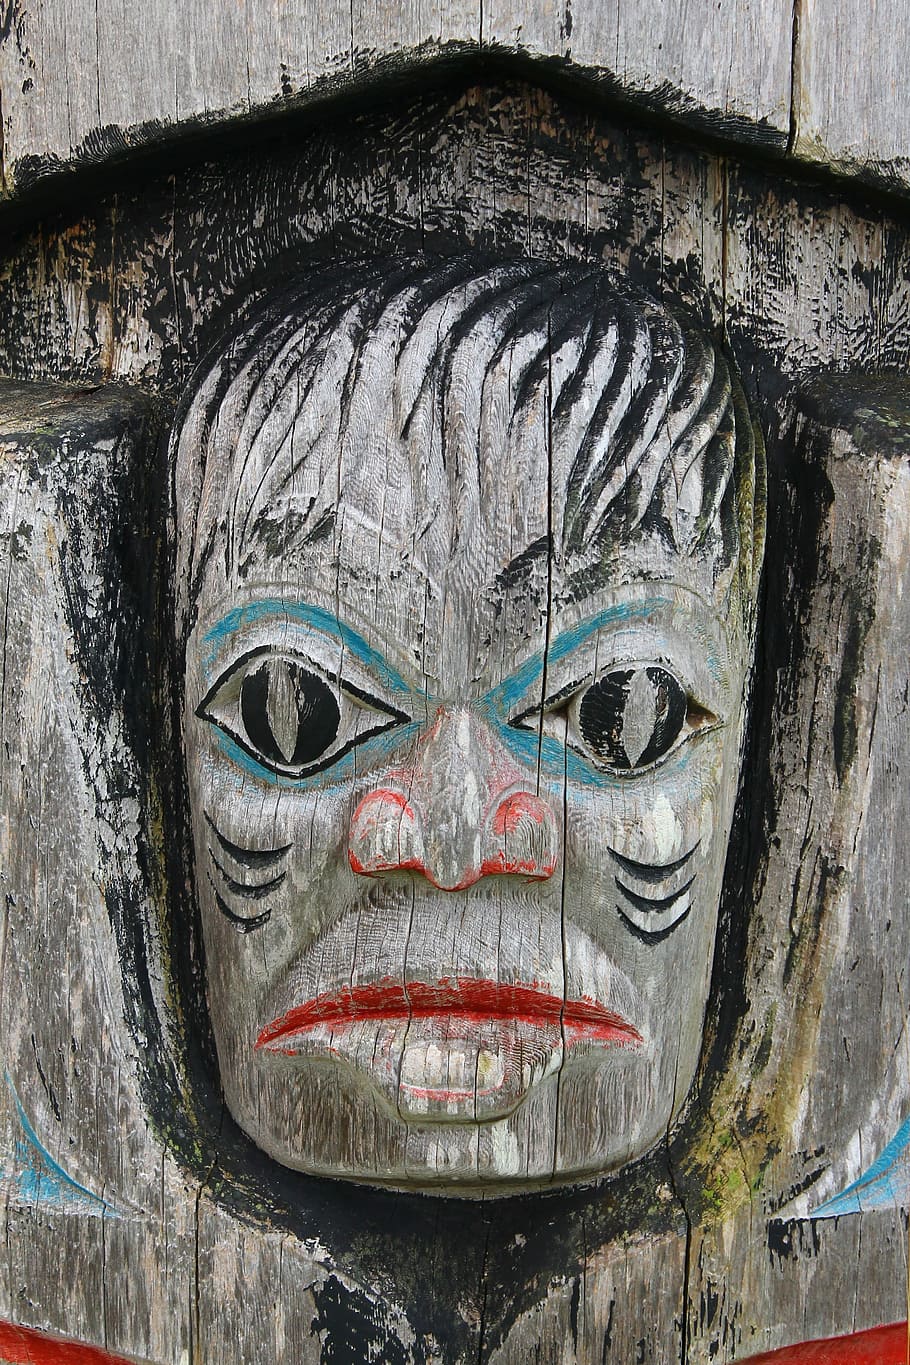 Totem Pole, Haida, Face, Native, pole, northwest, demon - fictional character, day, close-up, outdoors